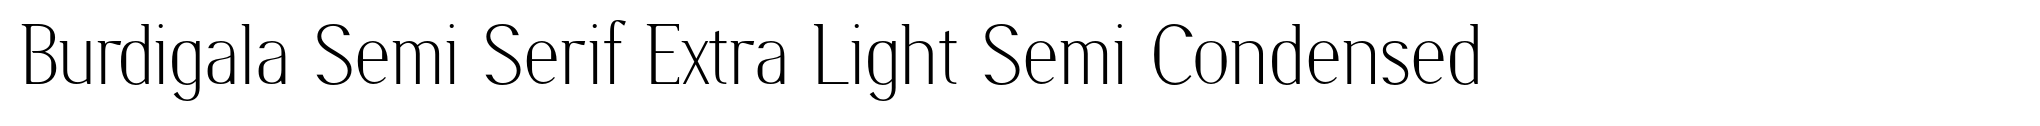 Burdigala Semi Serif Extra Light Semi Condensed image